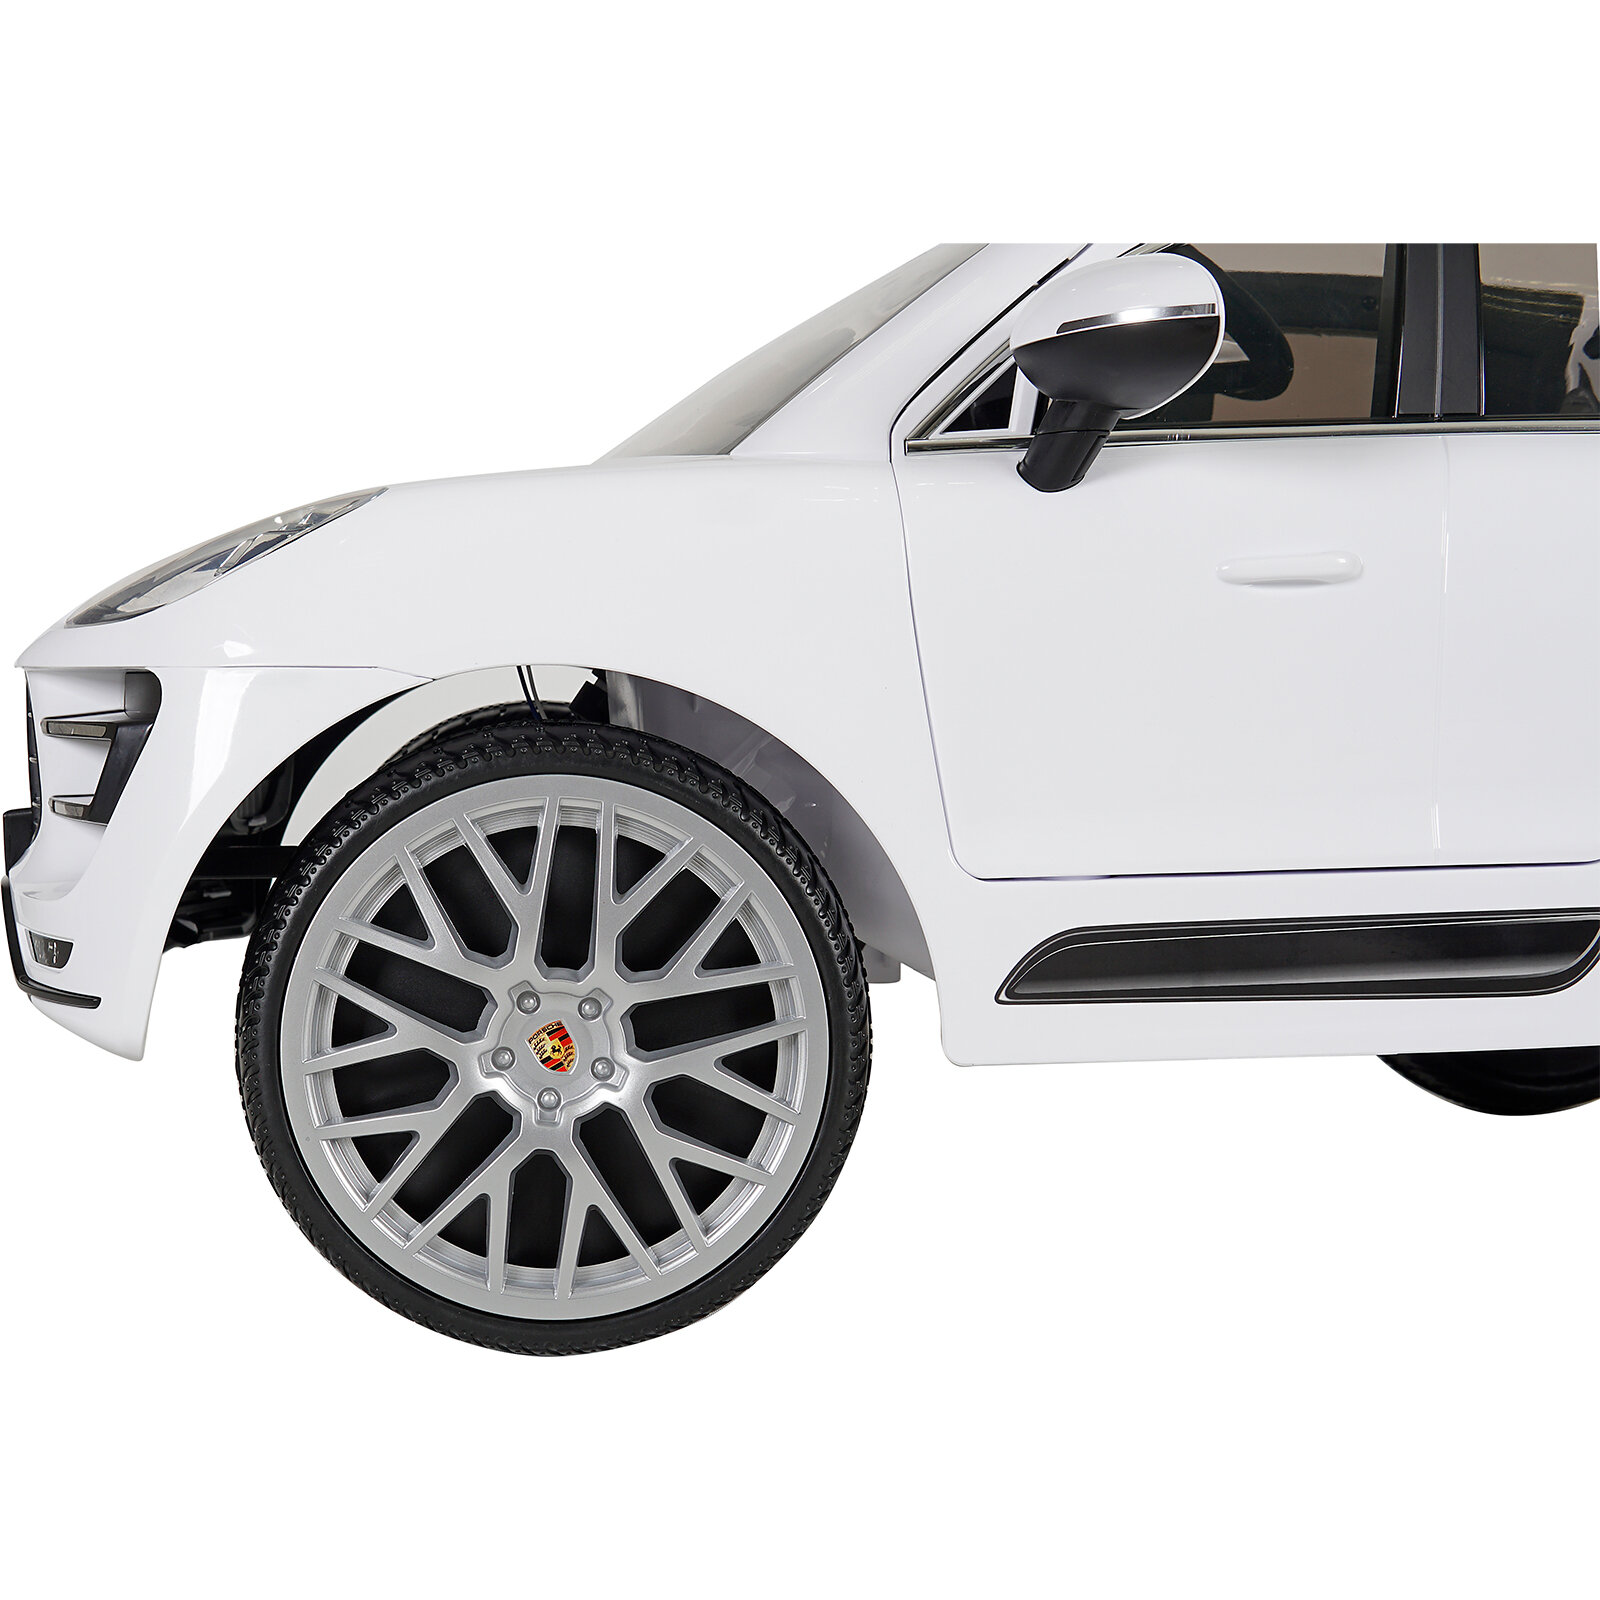 W416QHG4 Porsche Uzaktan Kumandalı 12 V Akülü Araba Beyaz